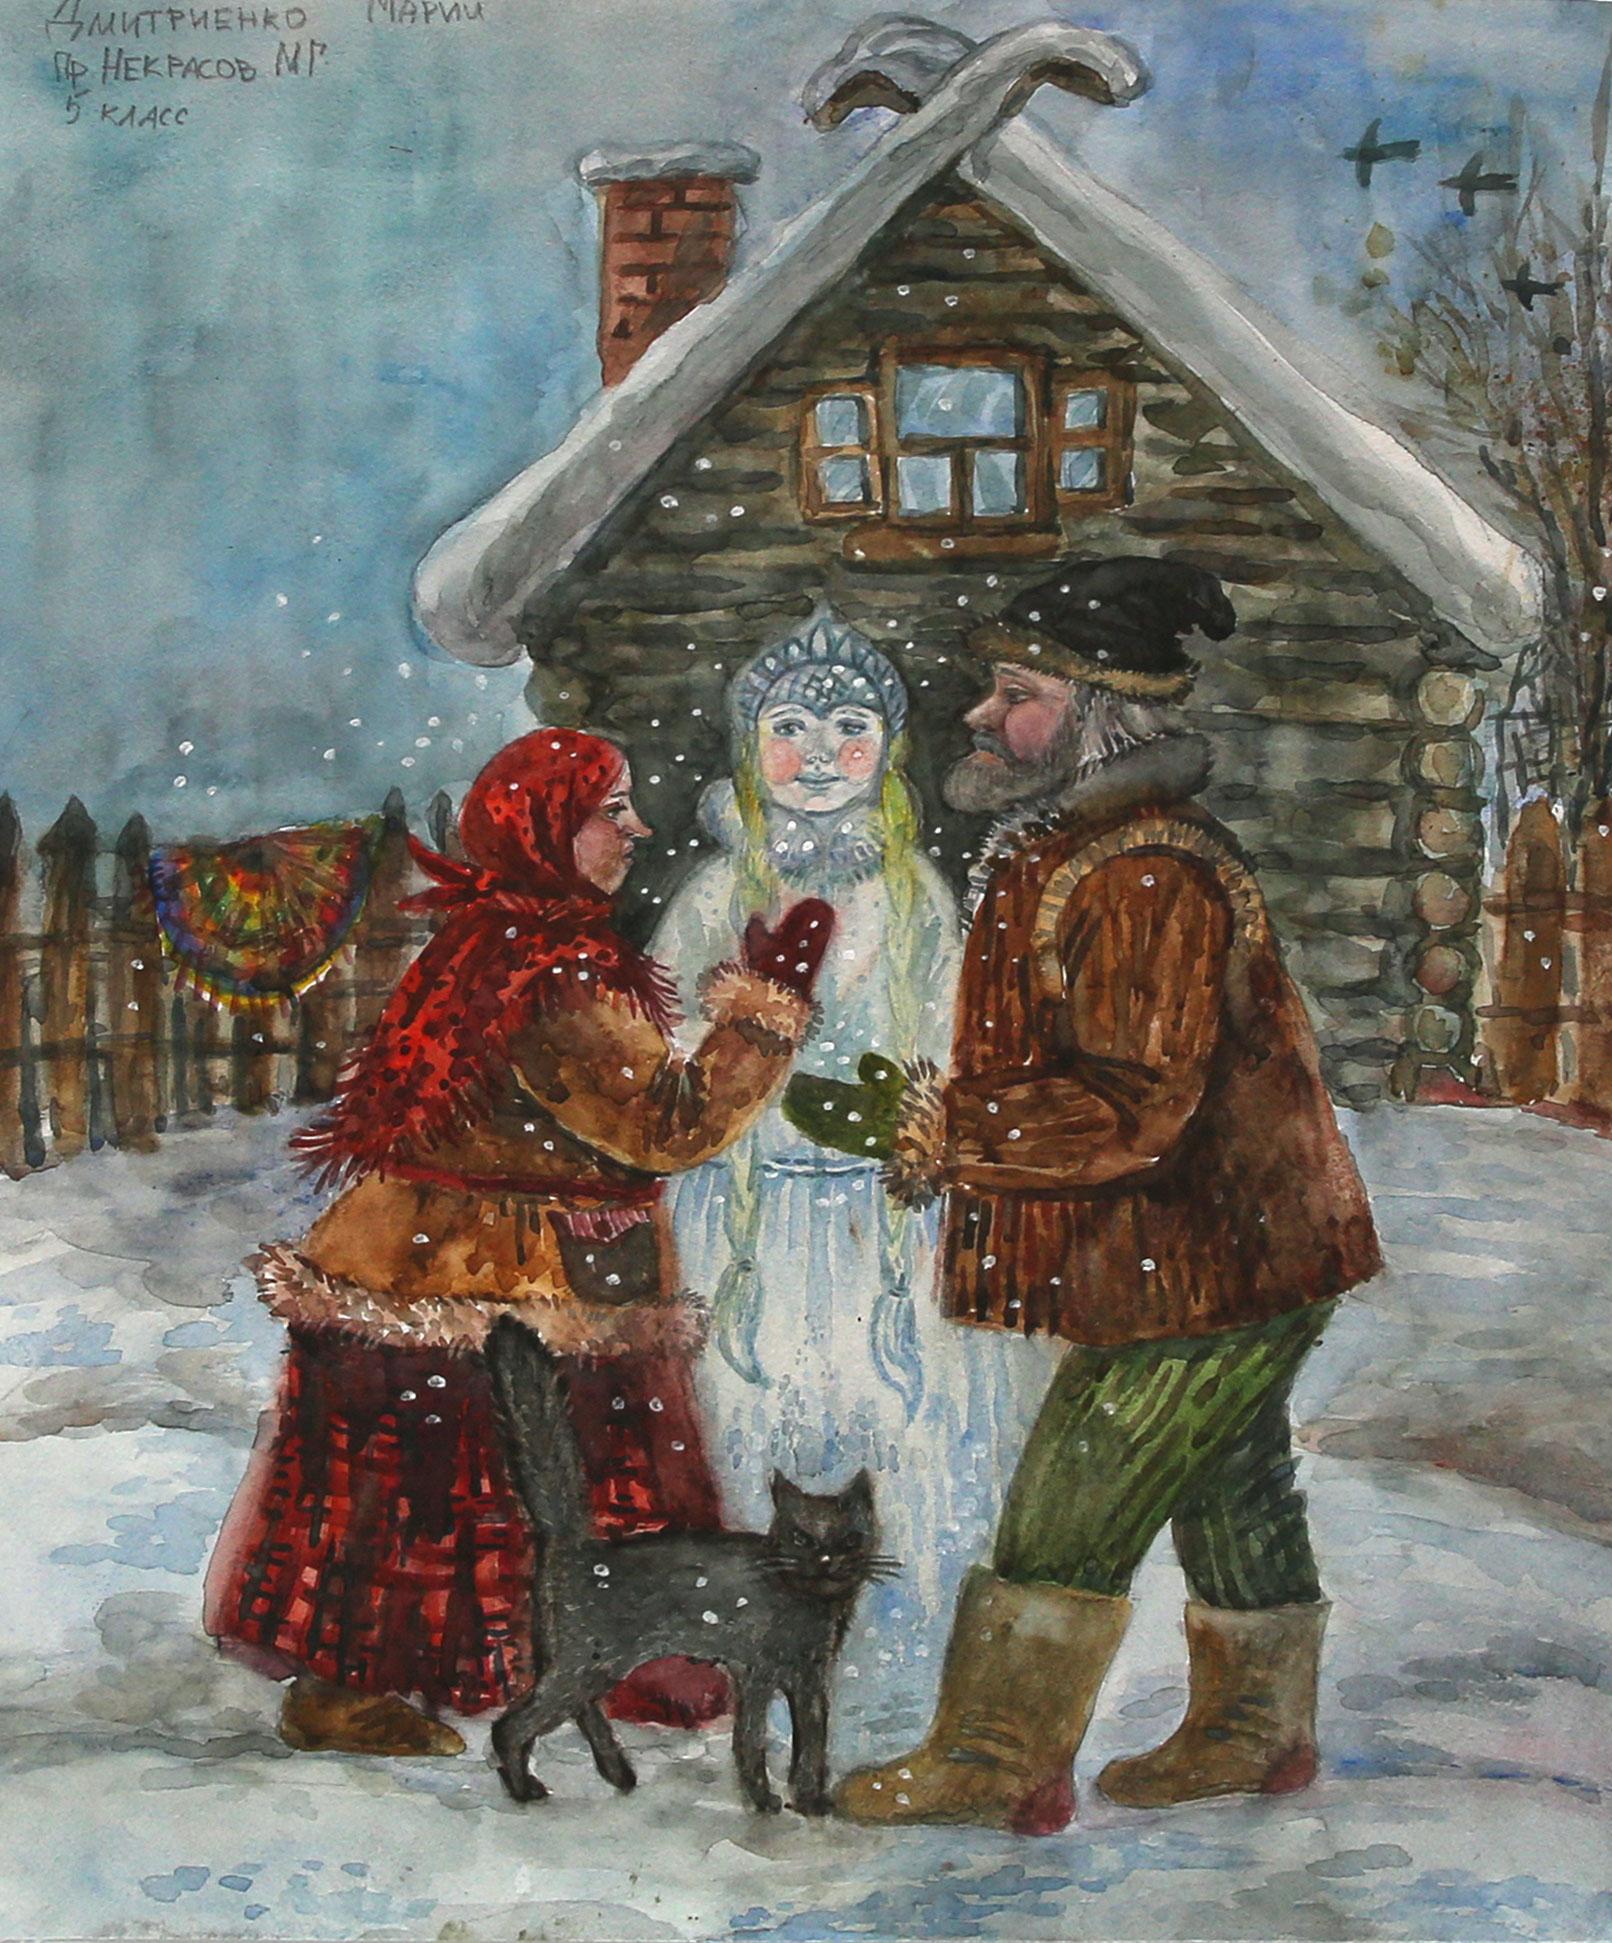 Dmitrienko M. Original modern art painting